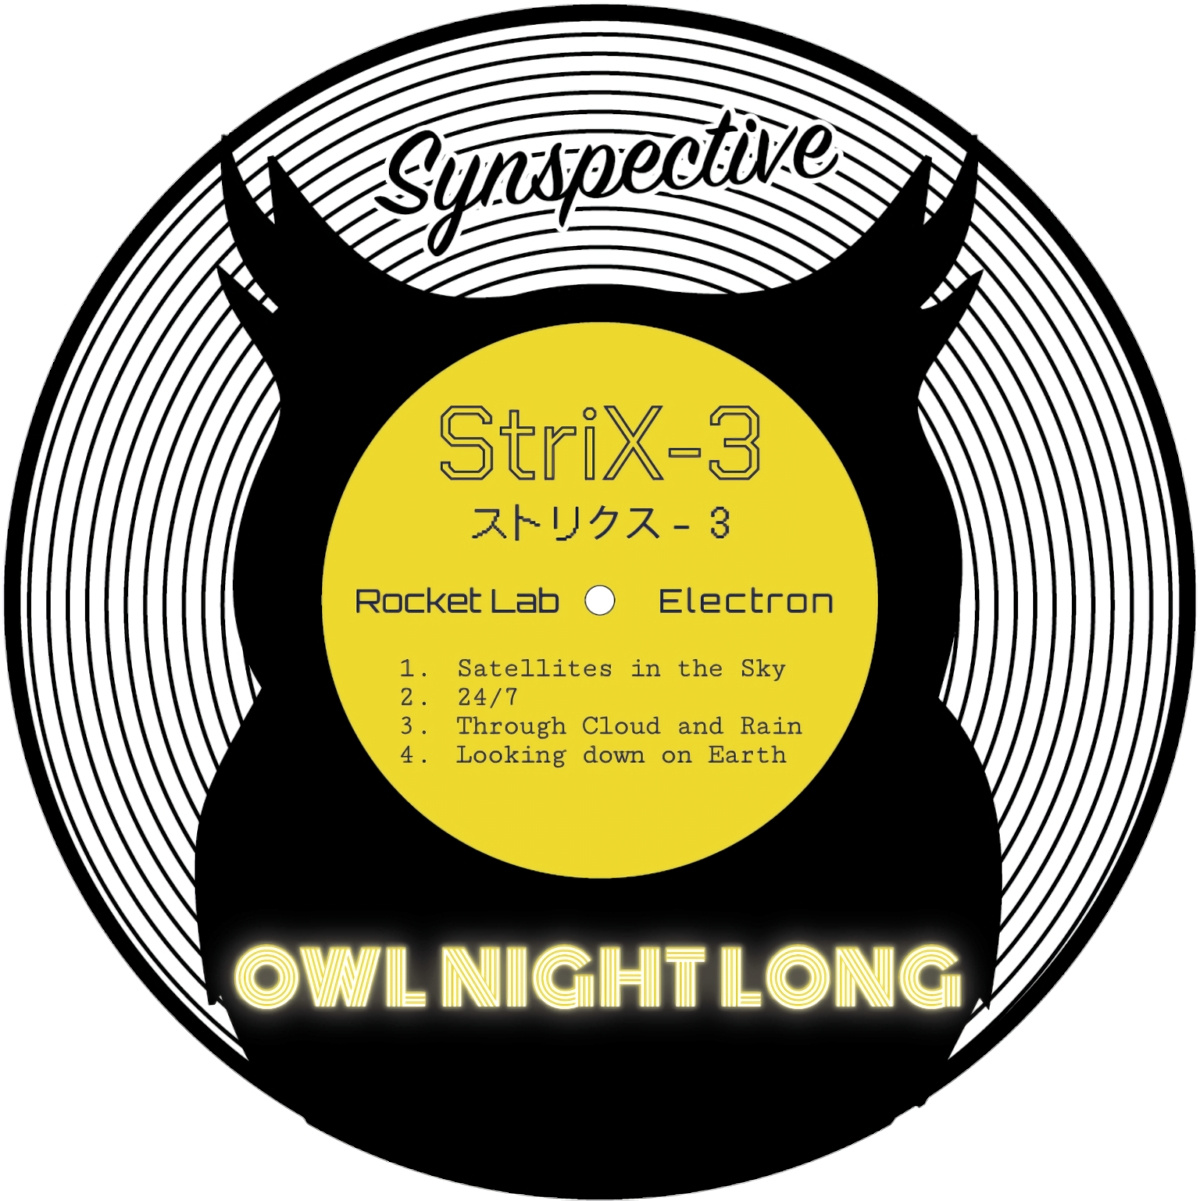 StriX-3の打ち上げミッション名はOwl Night Long（出典：Synspective）